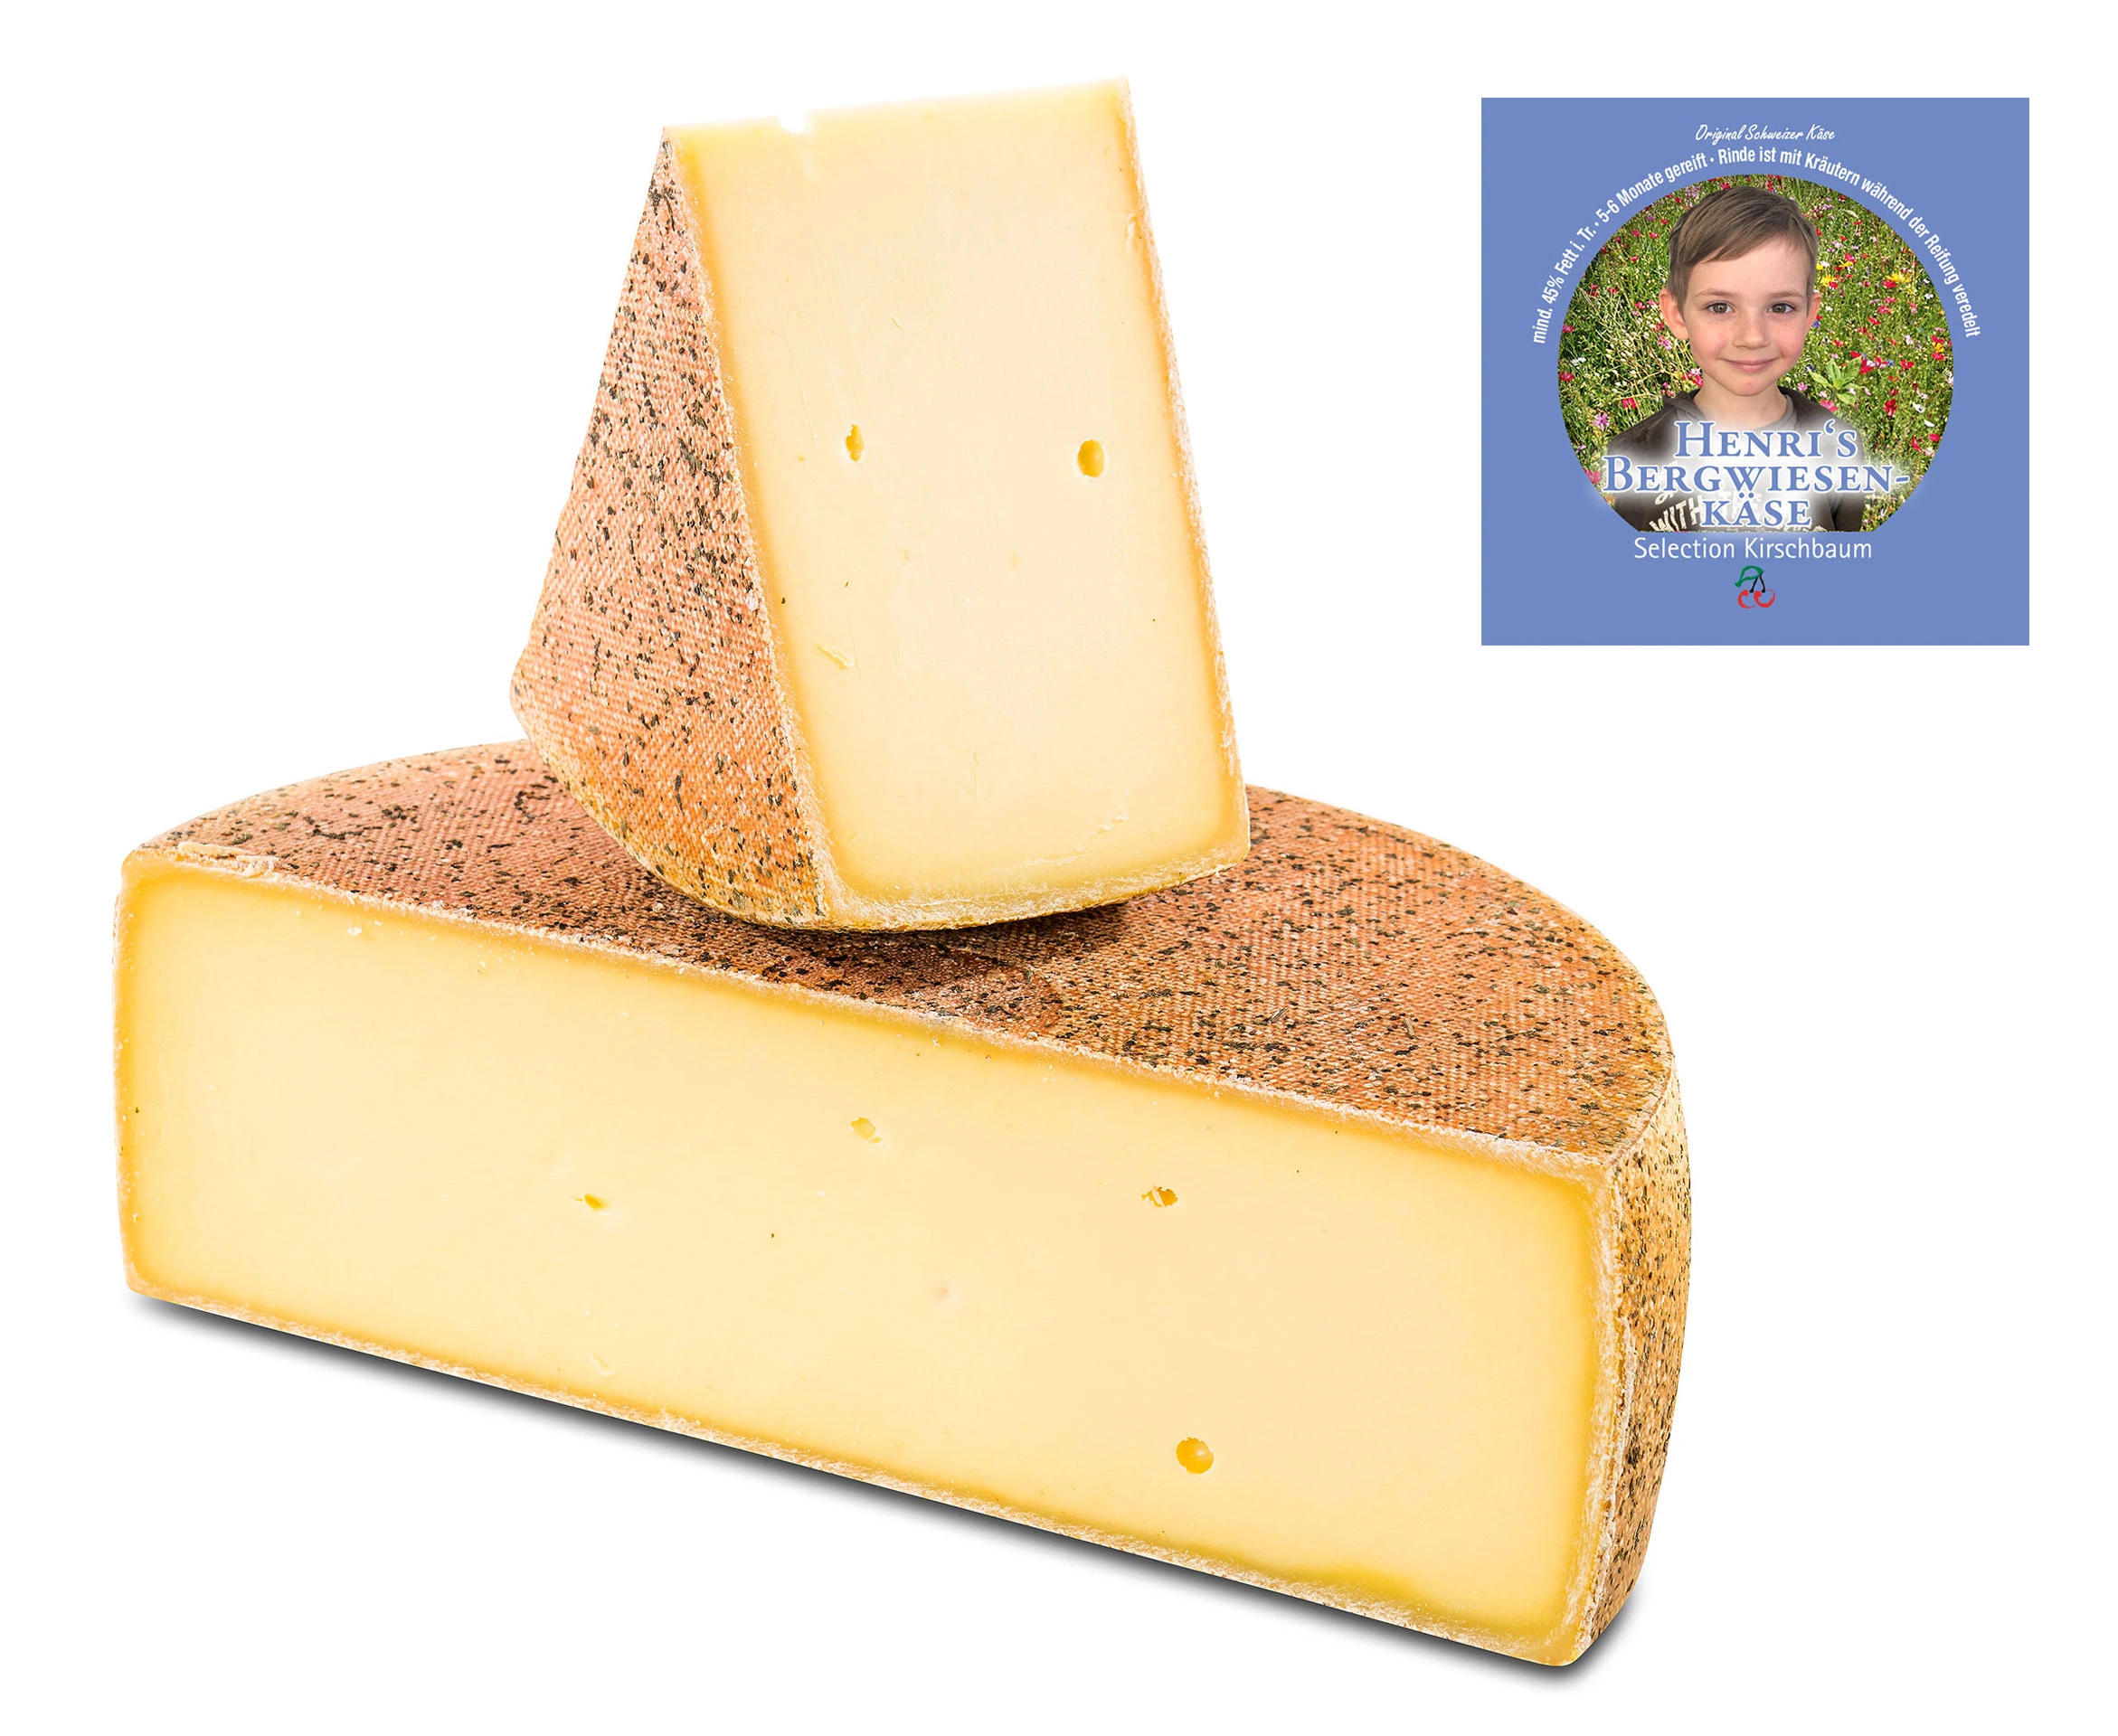 Henri's Bergwiesen Käse